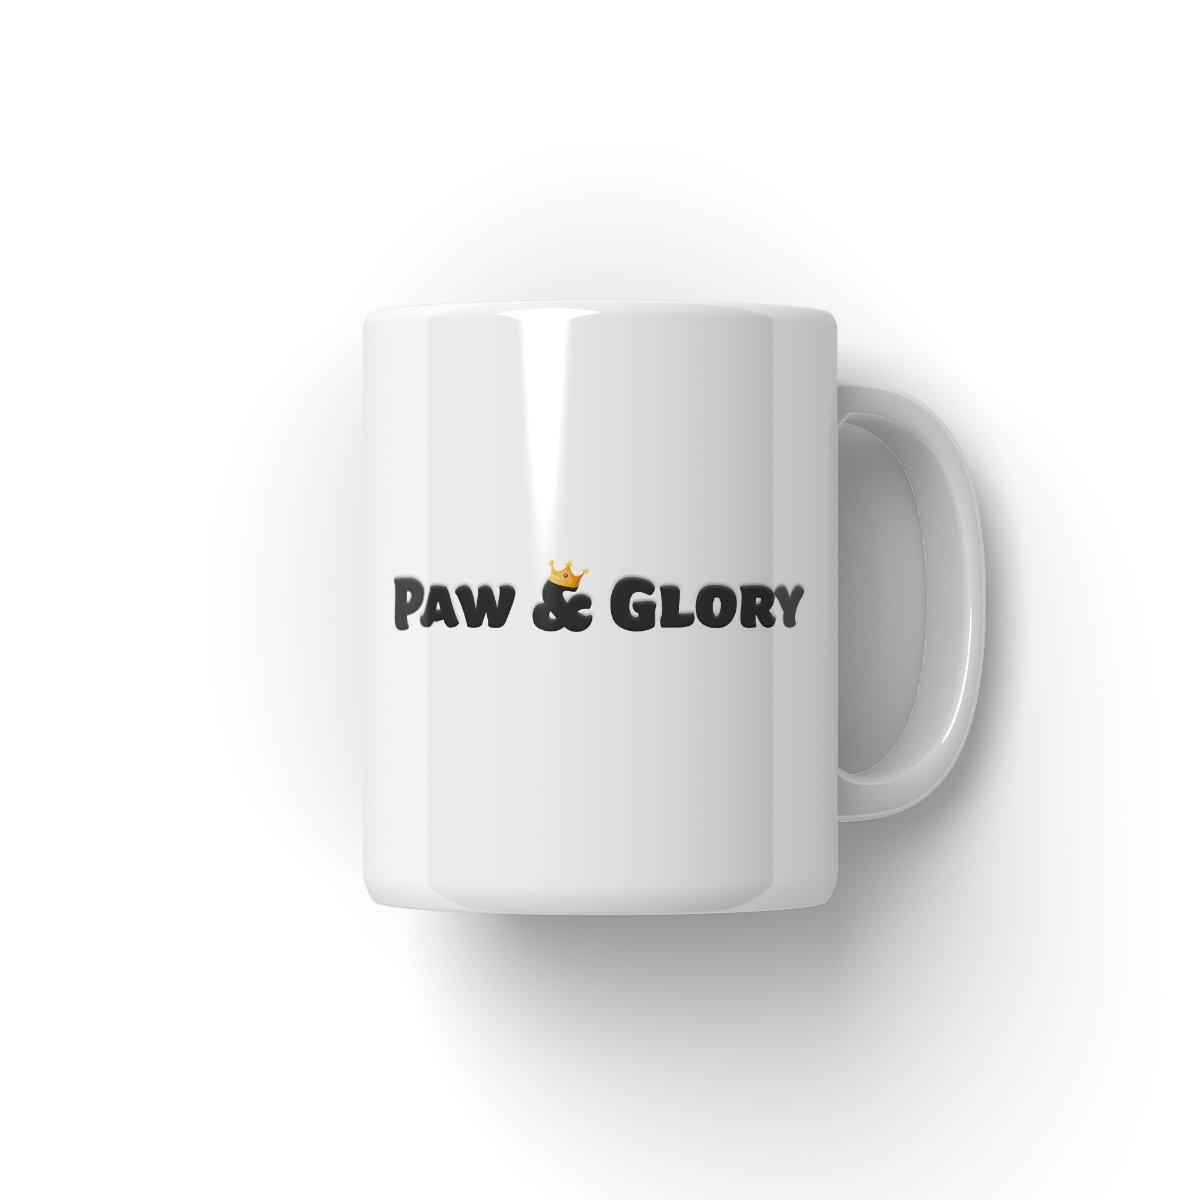 Paw & Glory, paw and glory, personalized mug with dogs, mug with dog picture, coffee mug with dogs, personalized pet coffee mugs, personalized pet mug, personalised pet coffee mugs, Pet Portraits Mug